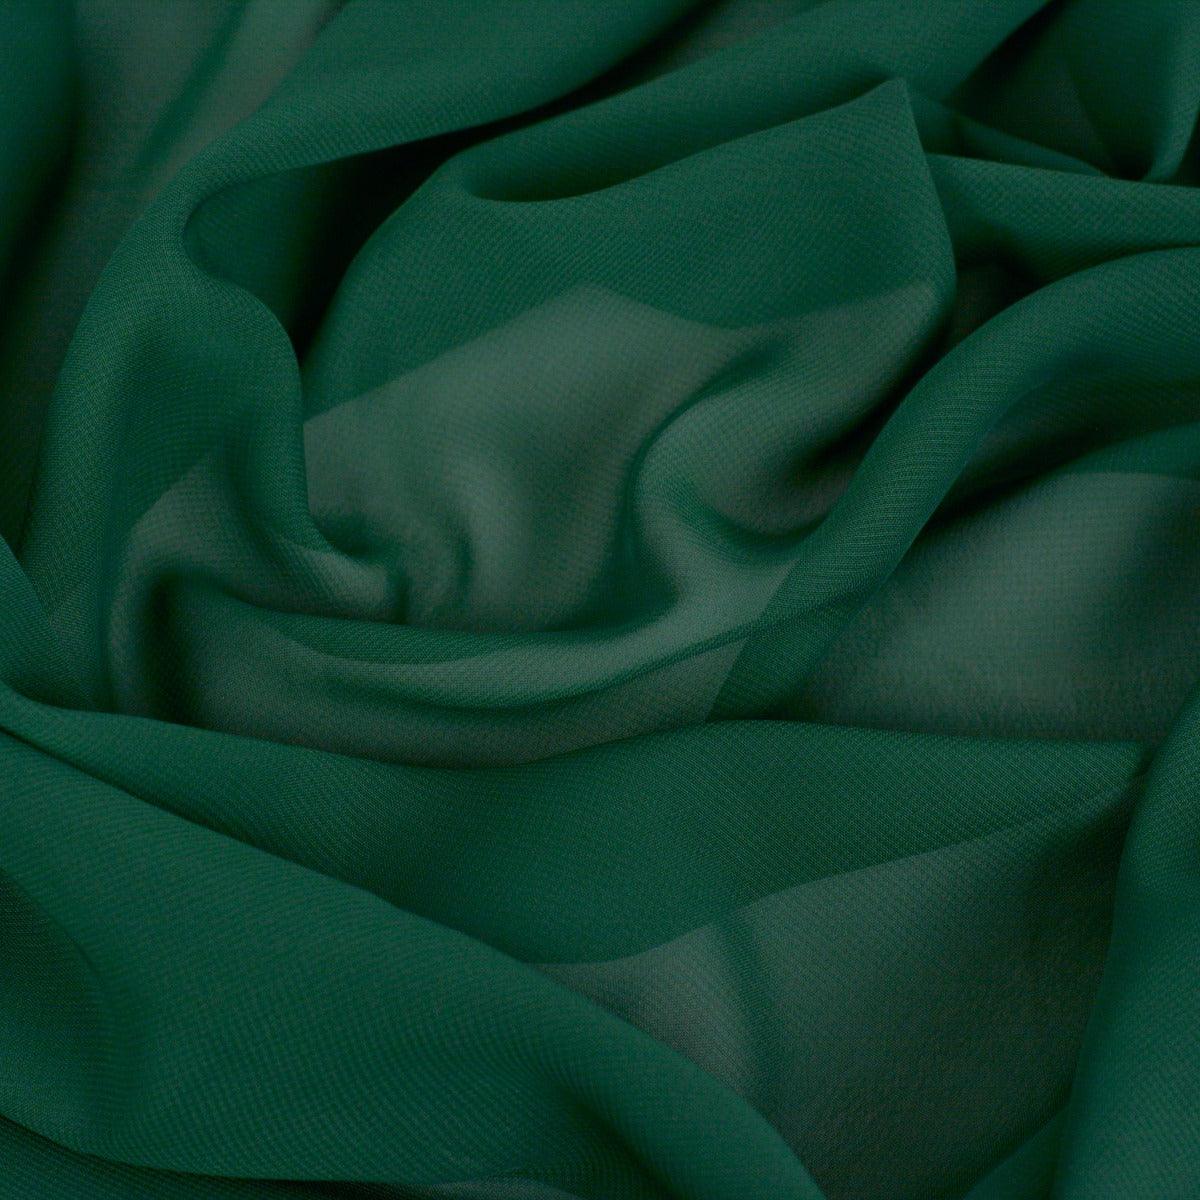 Voal Chiffon - Verde Smarald